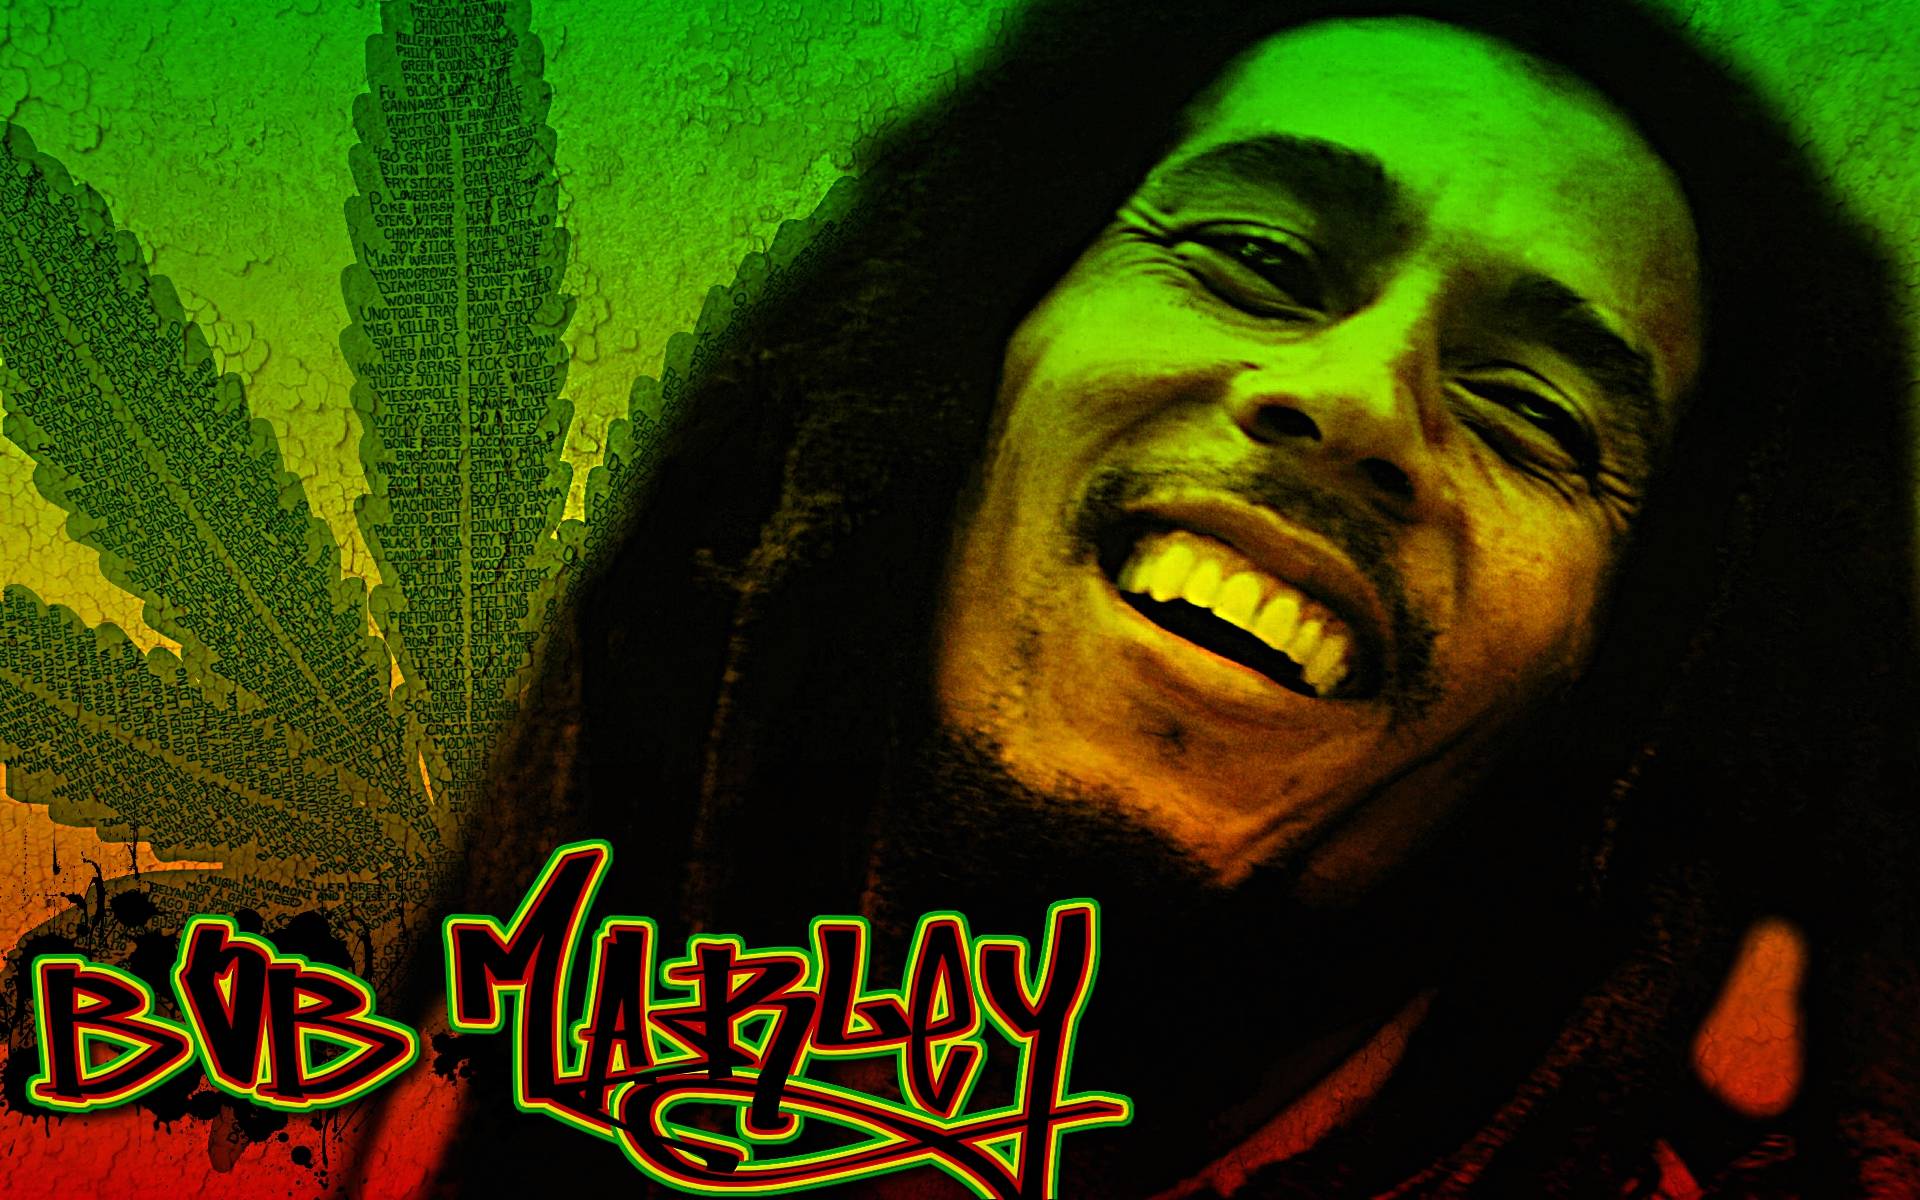 Bob Marley Background Photo Wallpaper